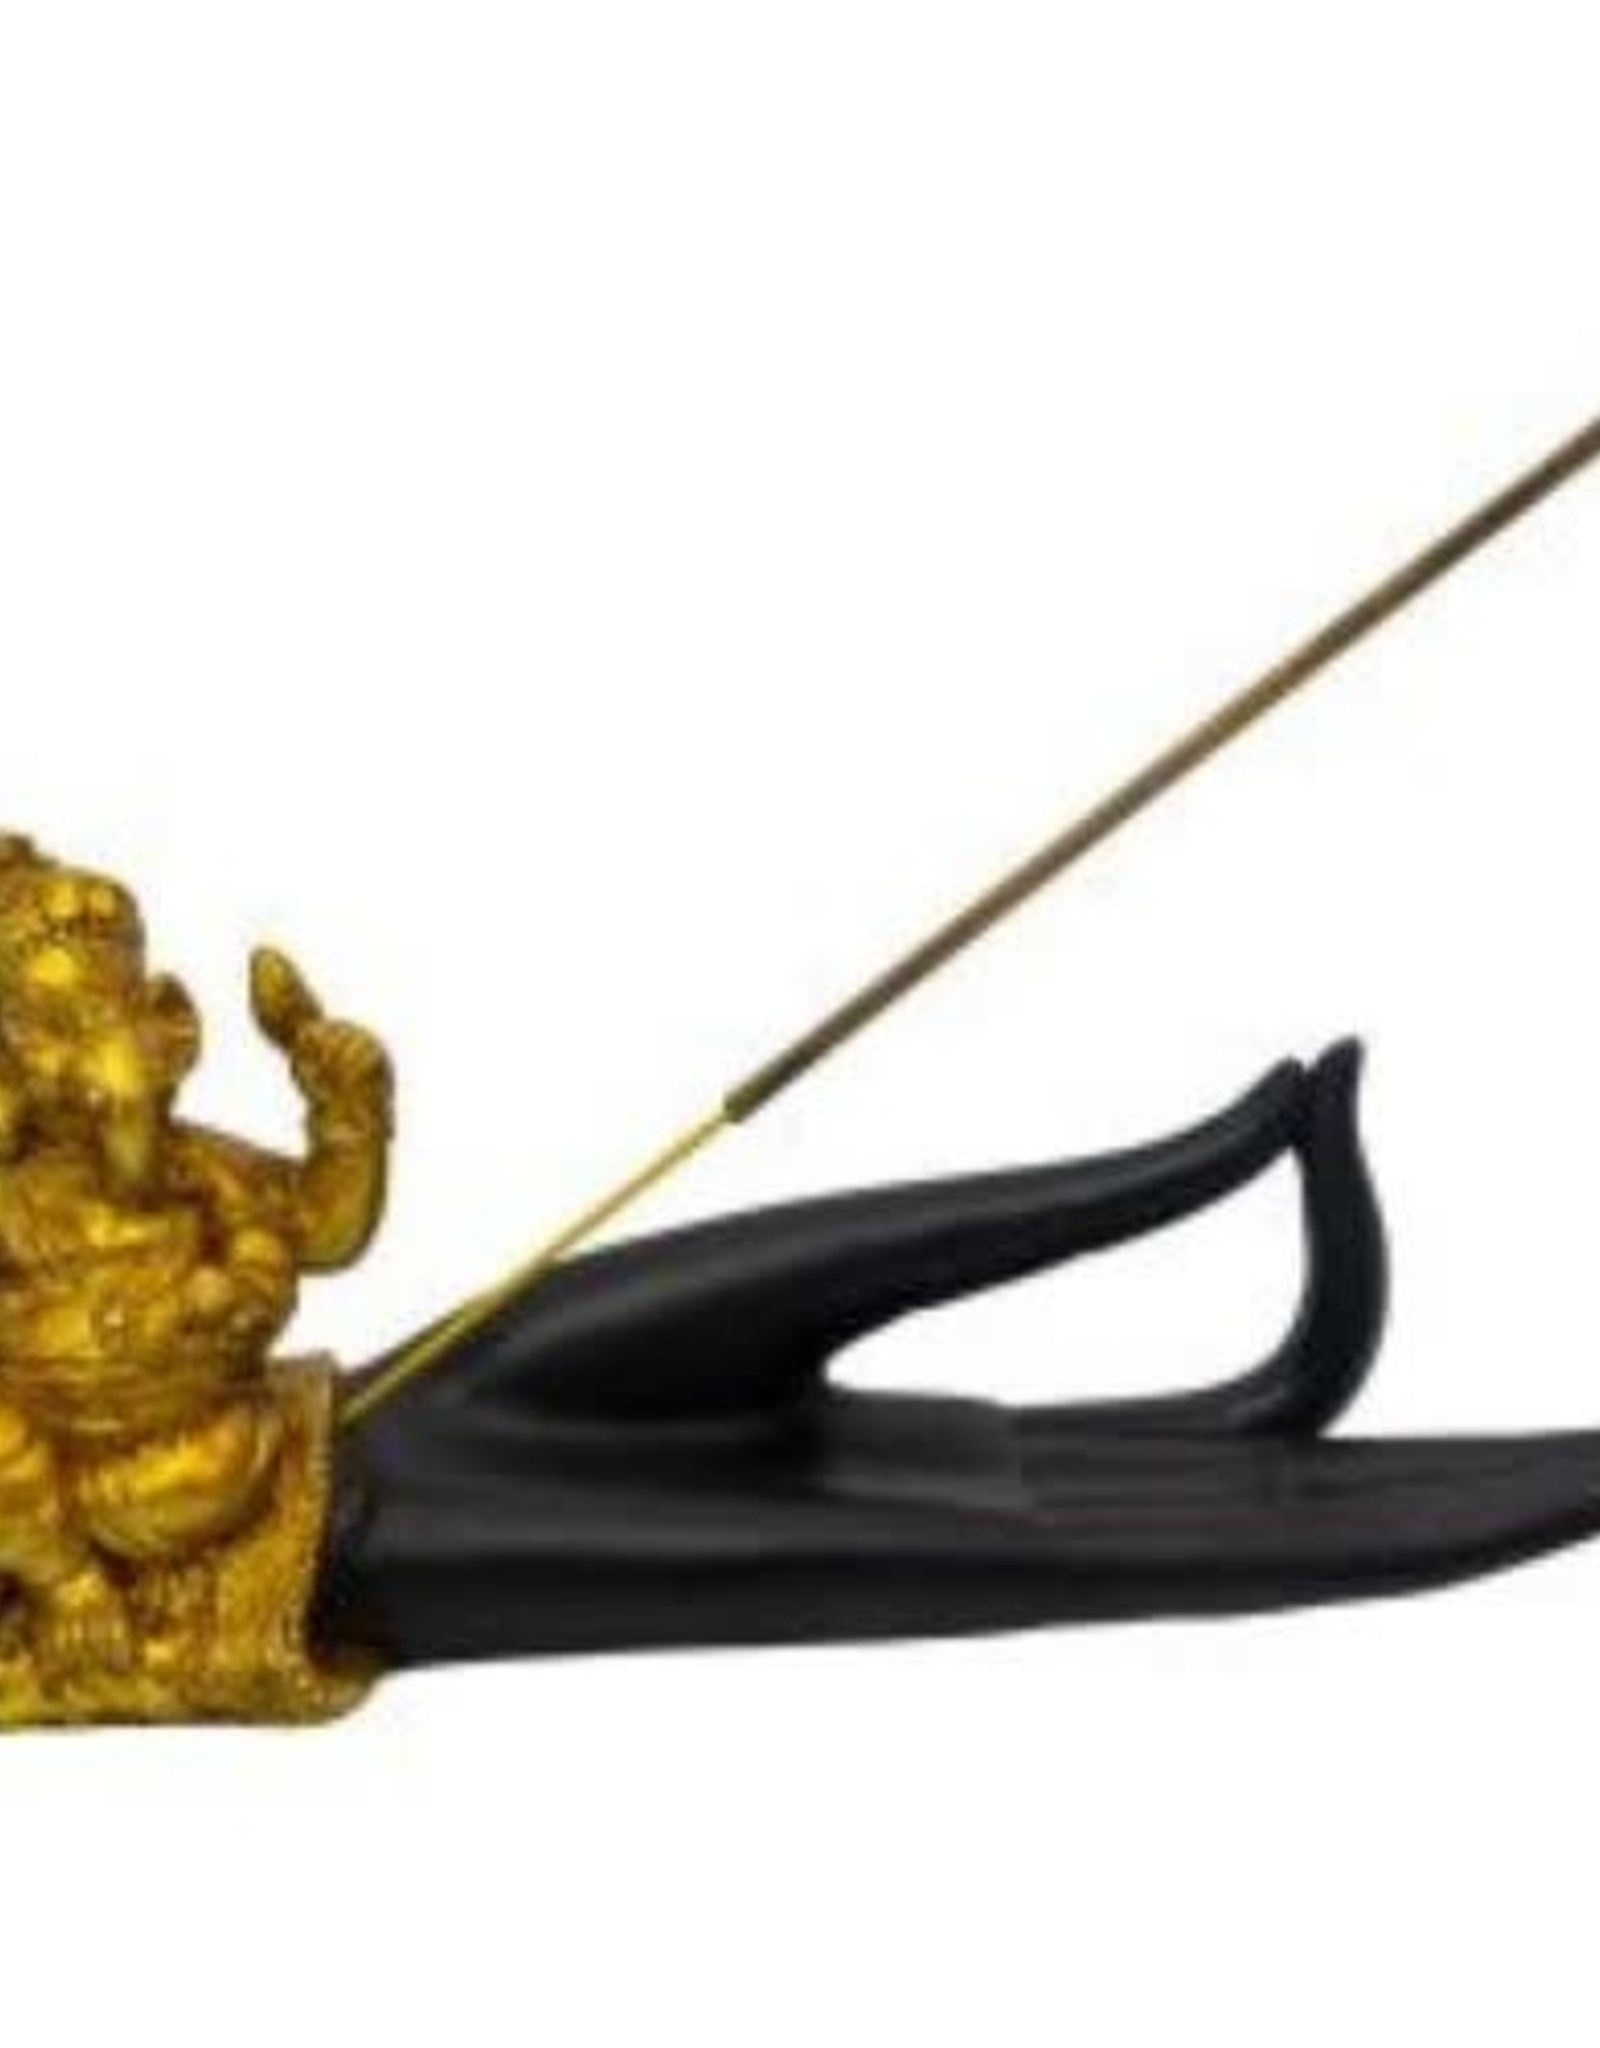 Mudra Hand Ganesha Incense Burner 9.5"